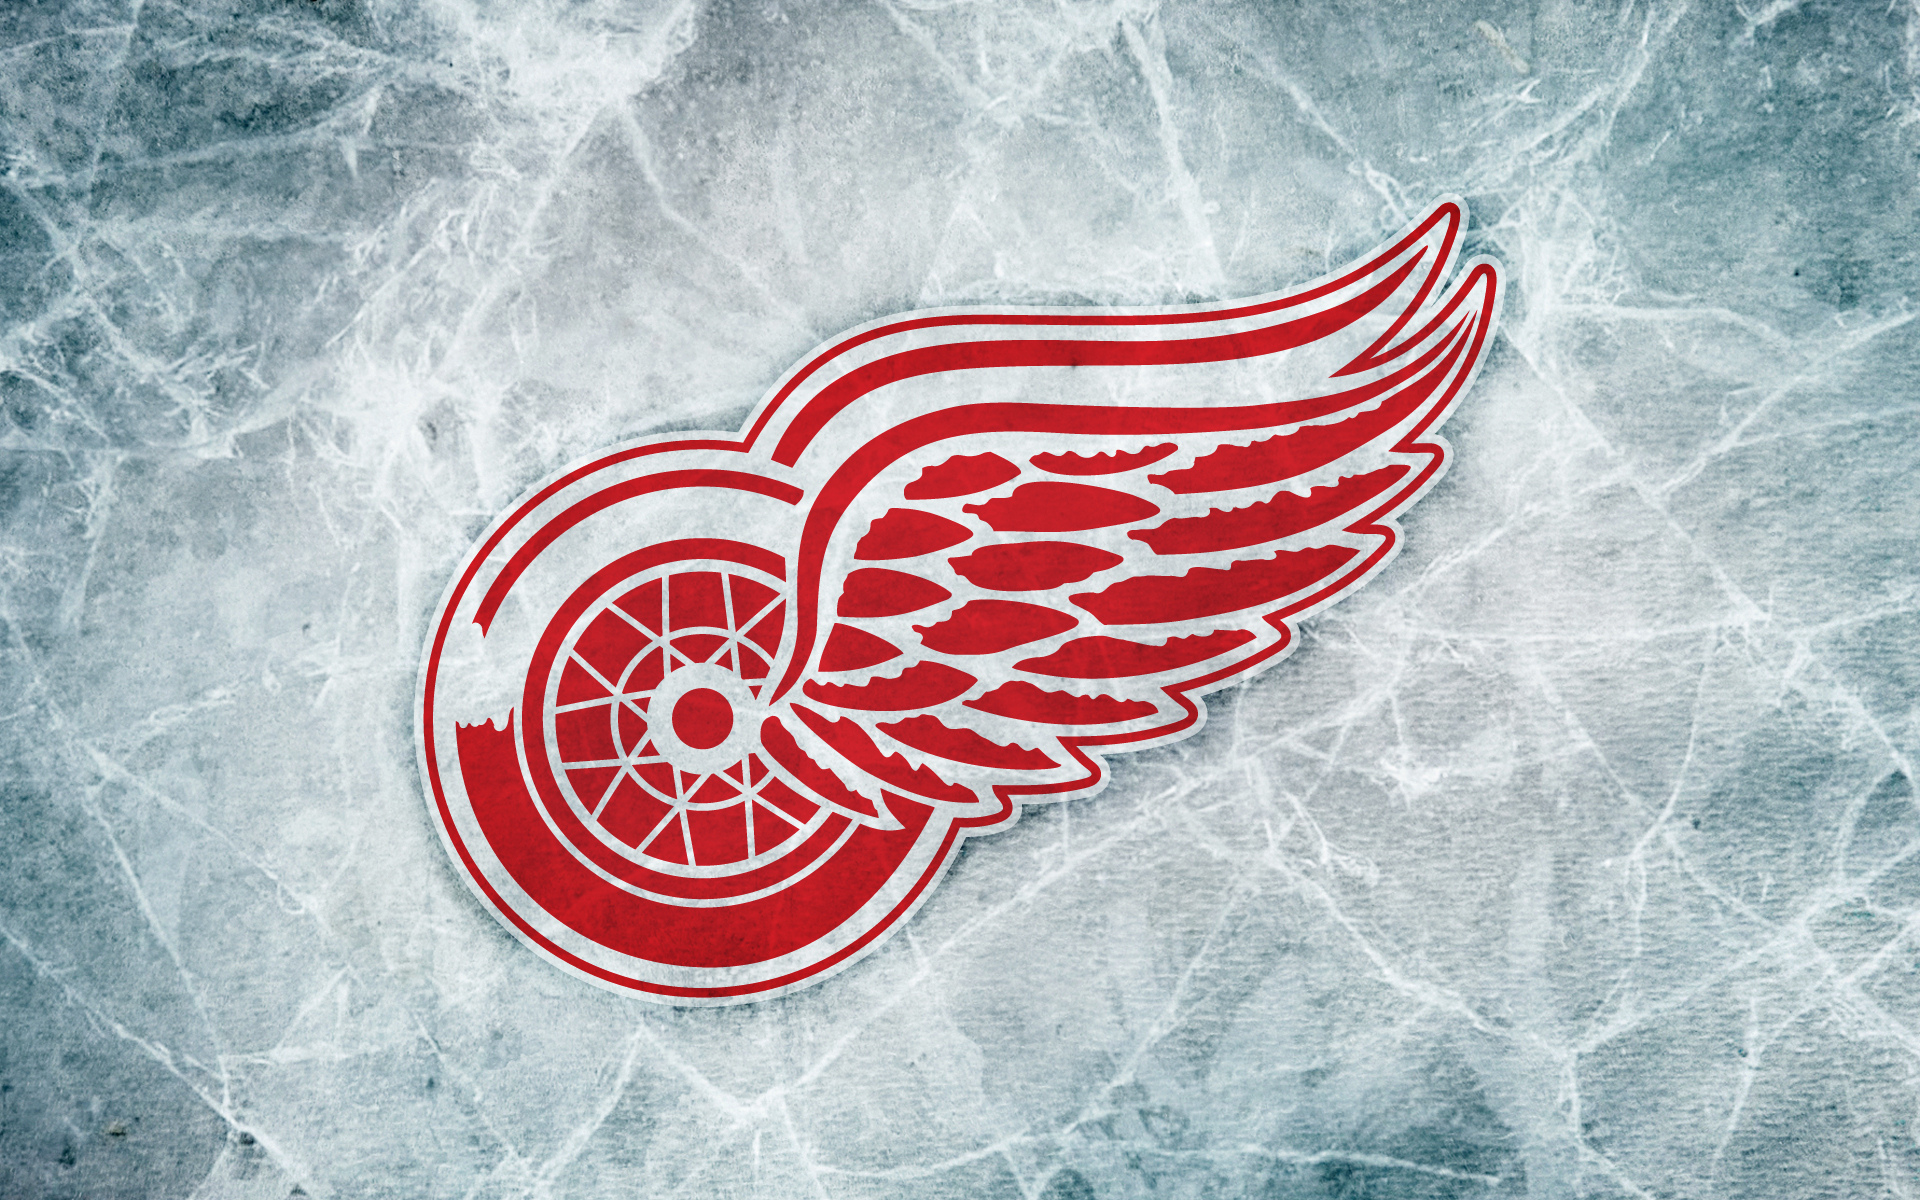 Detroit Red Wings hockey team logo on a sports-themed desktop wallpaper.